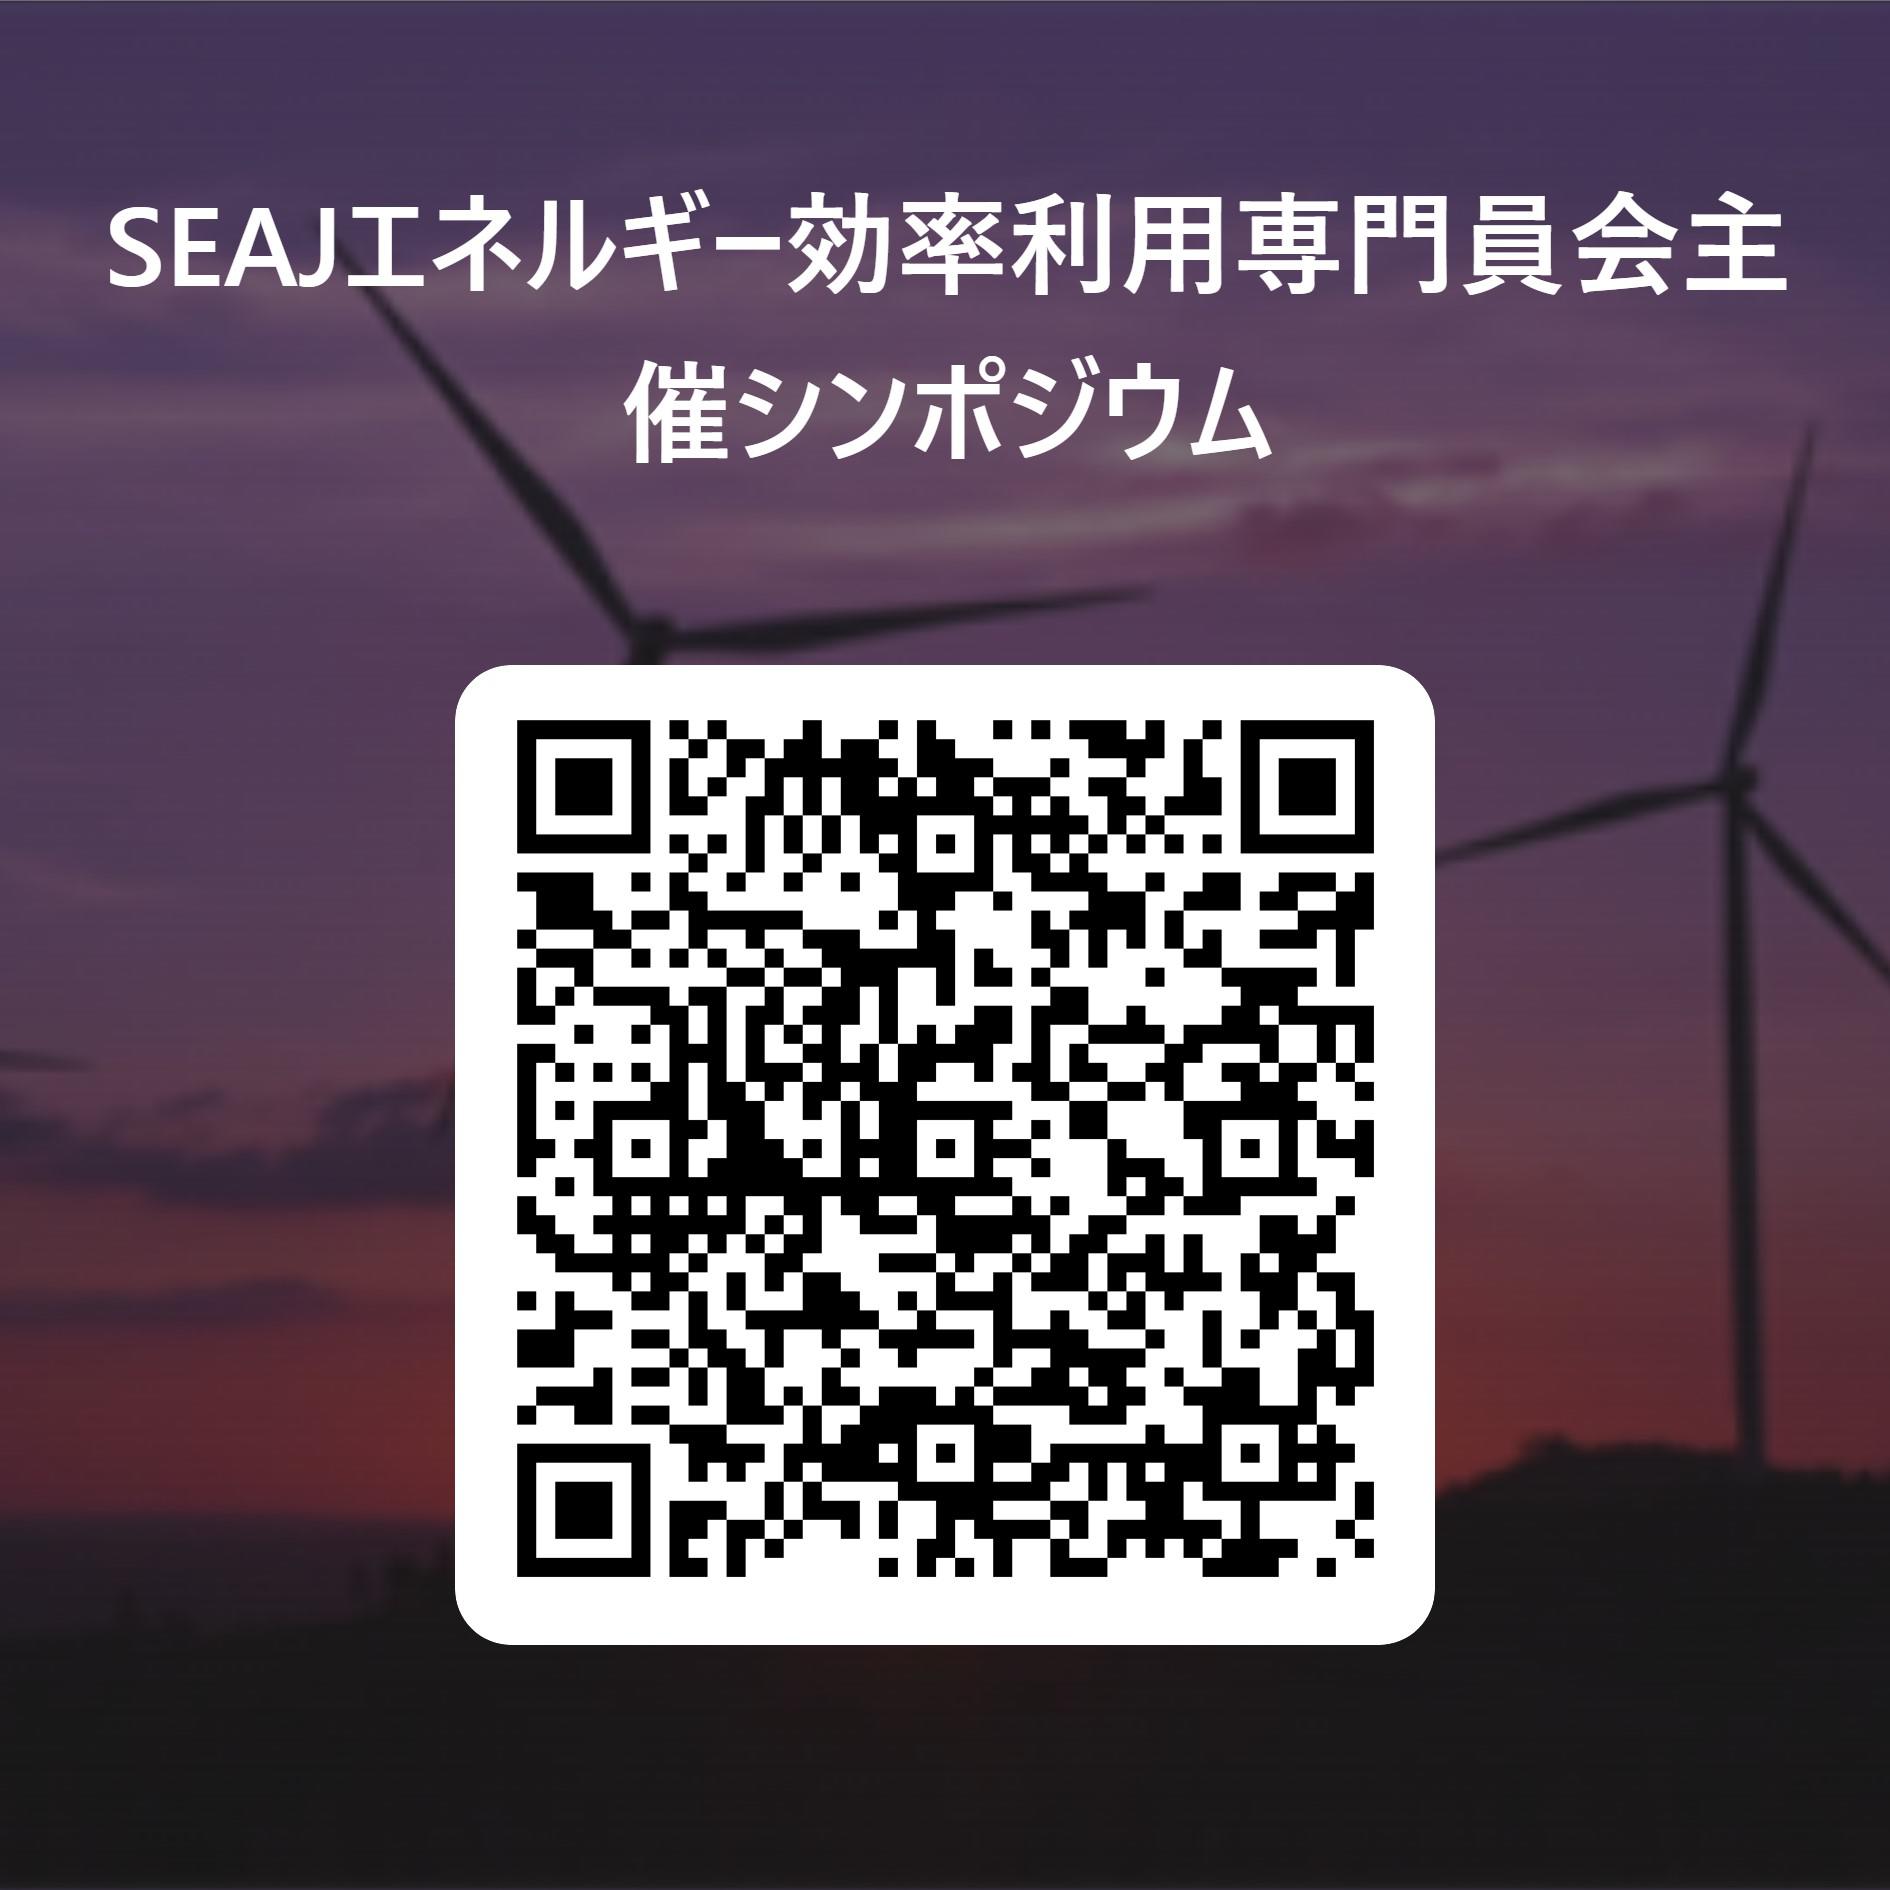 SEAJエネルギー効率利用専門員会主催シンポジウム  用 QR コード.jpeg